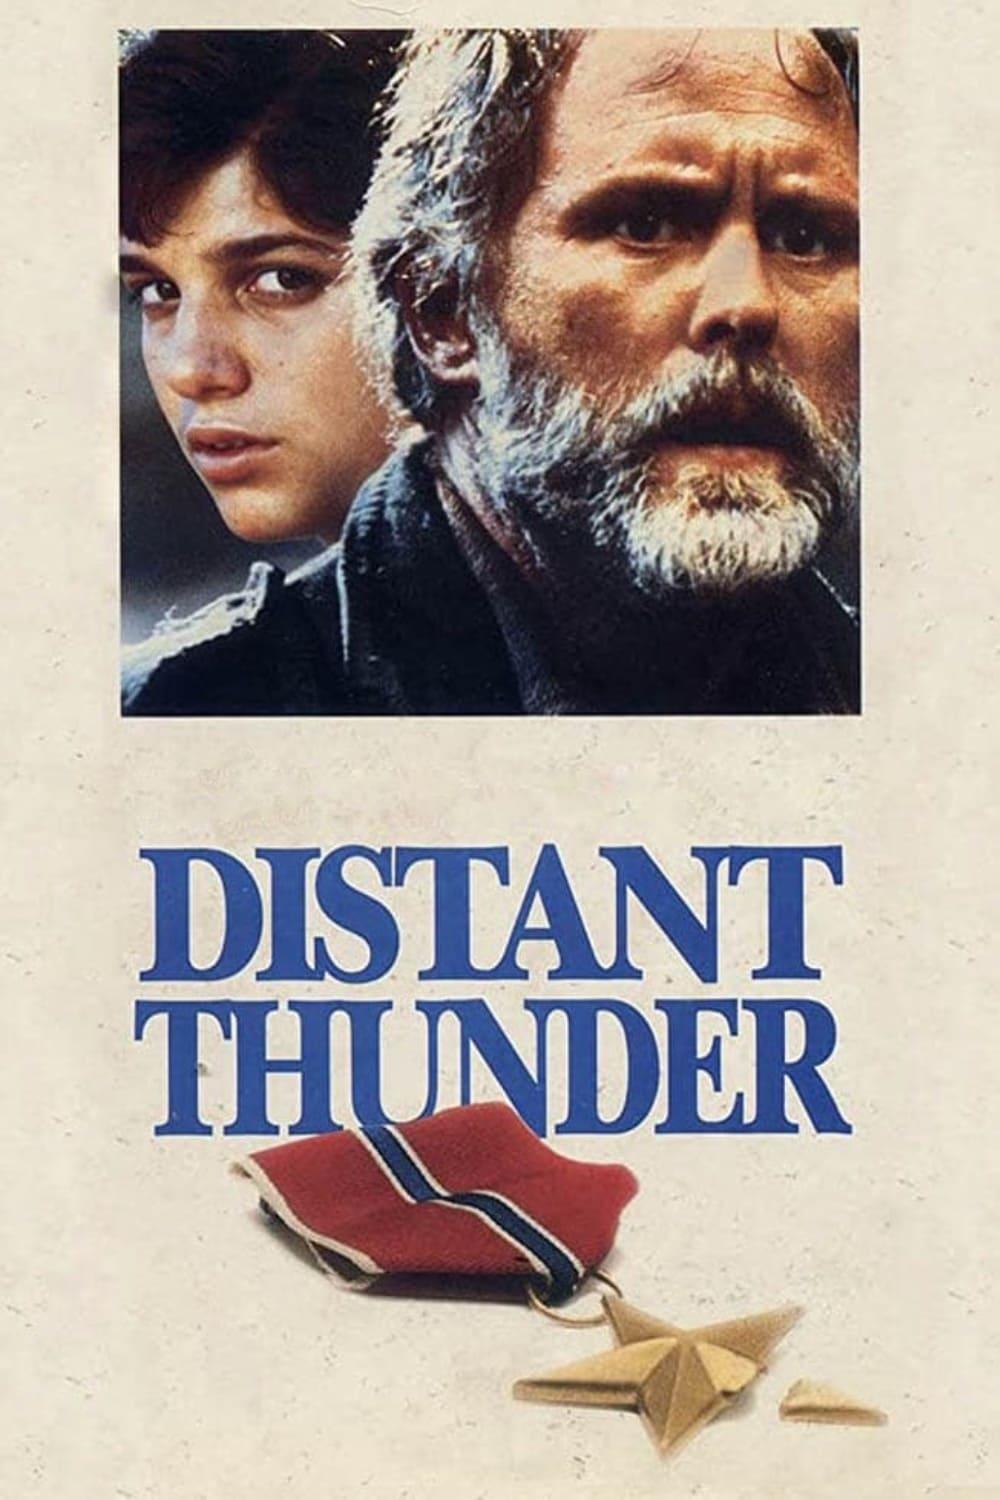 Distant Thunder poster